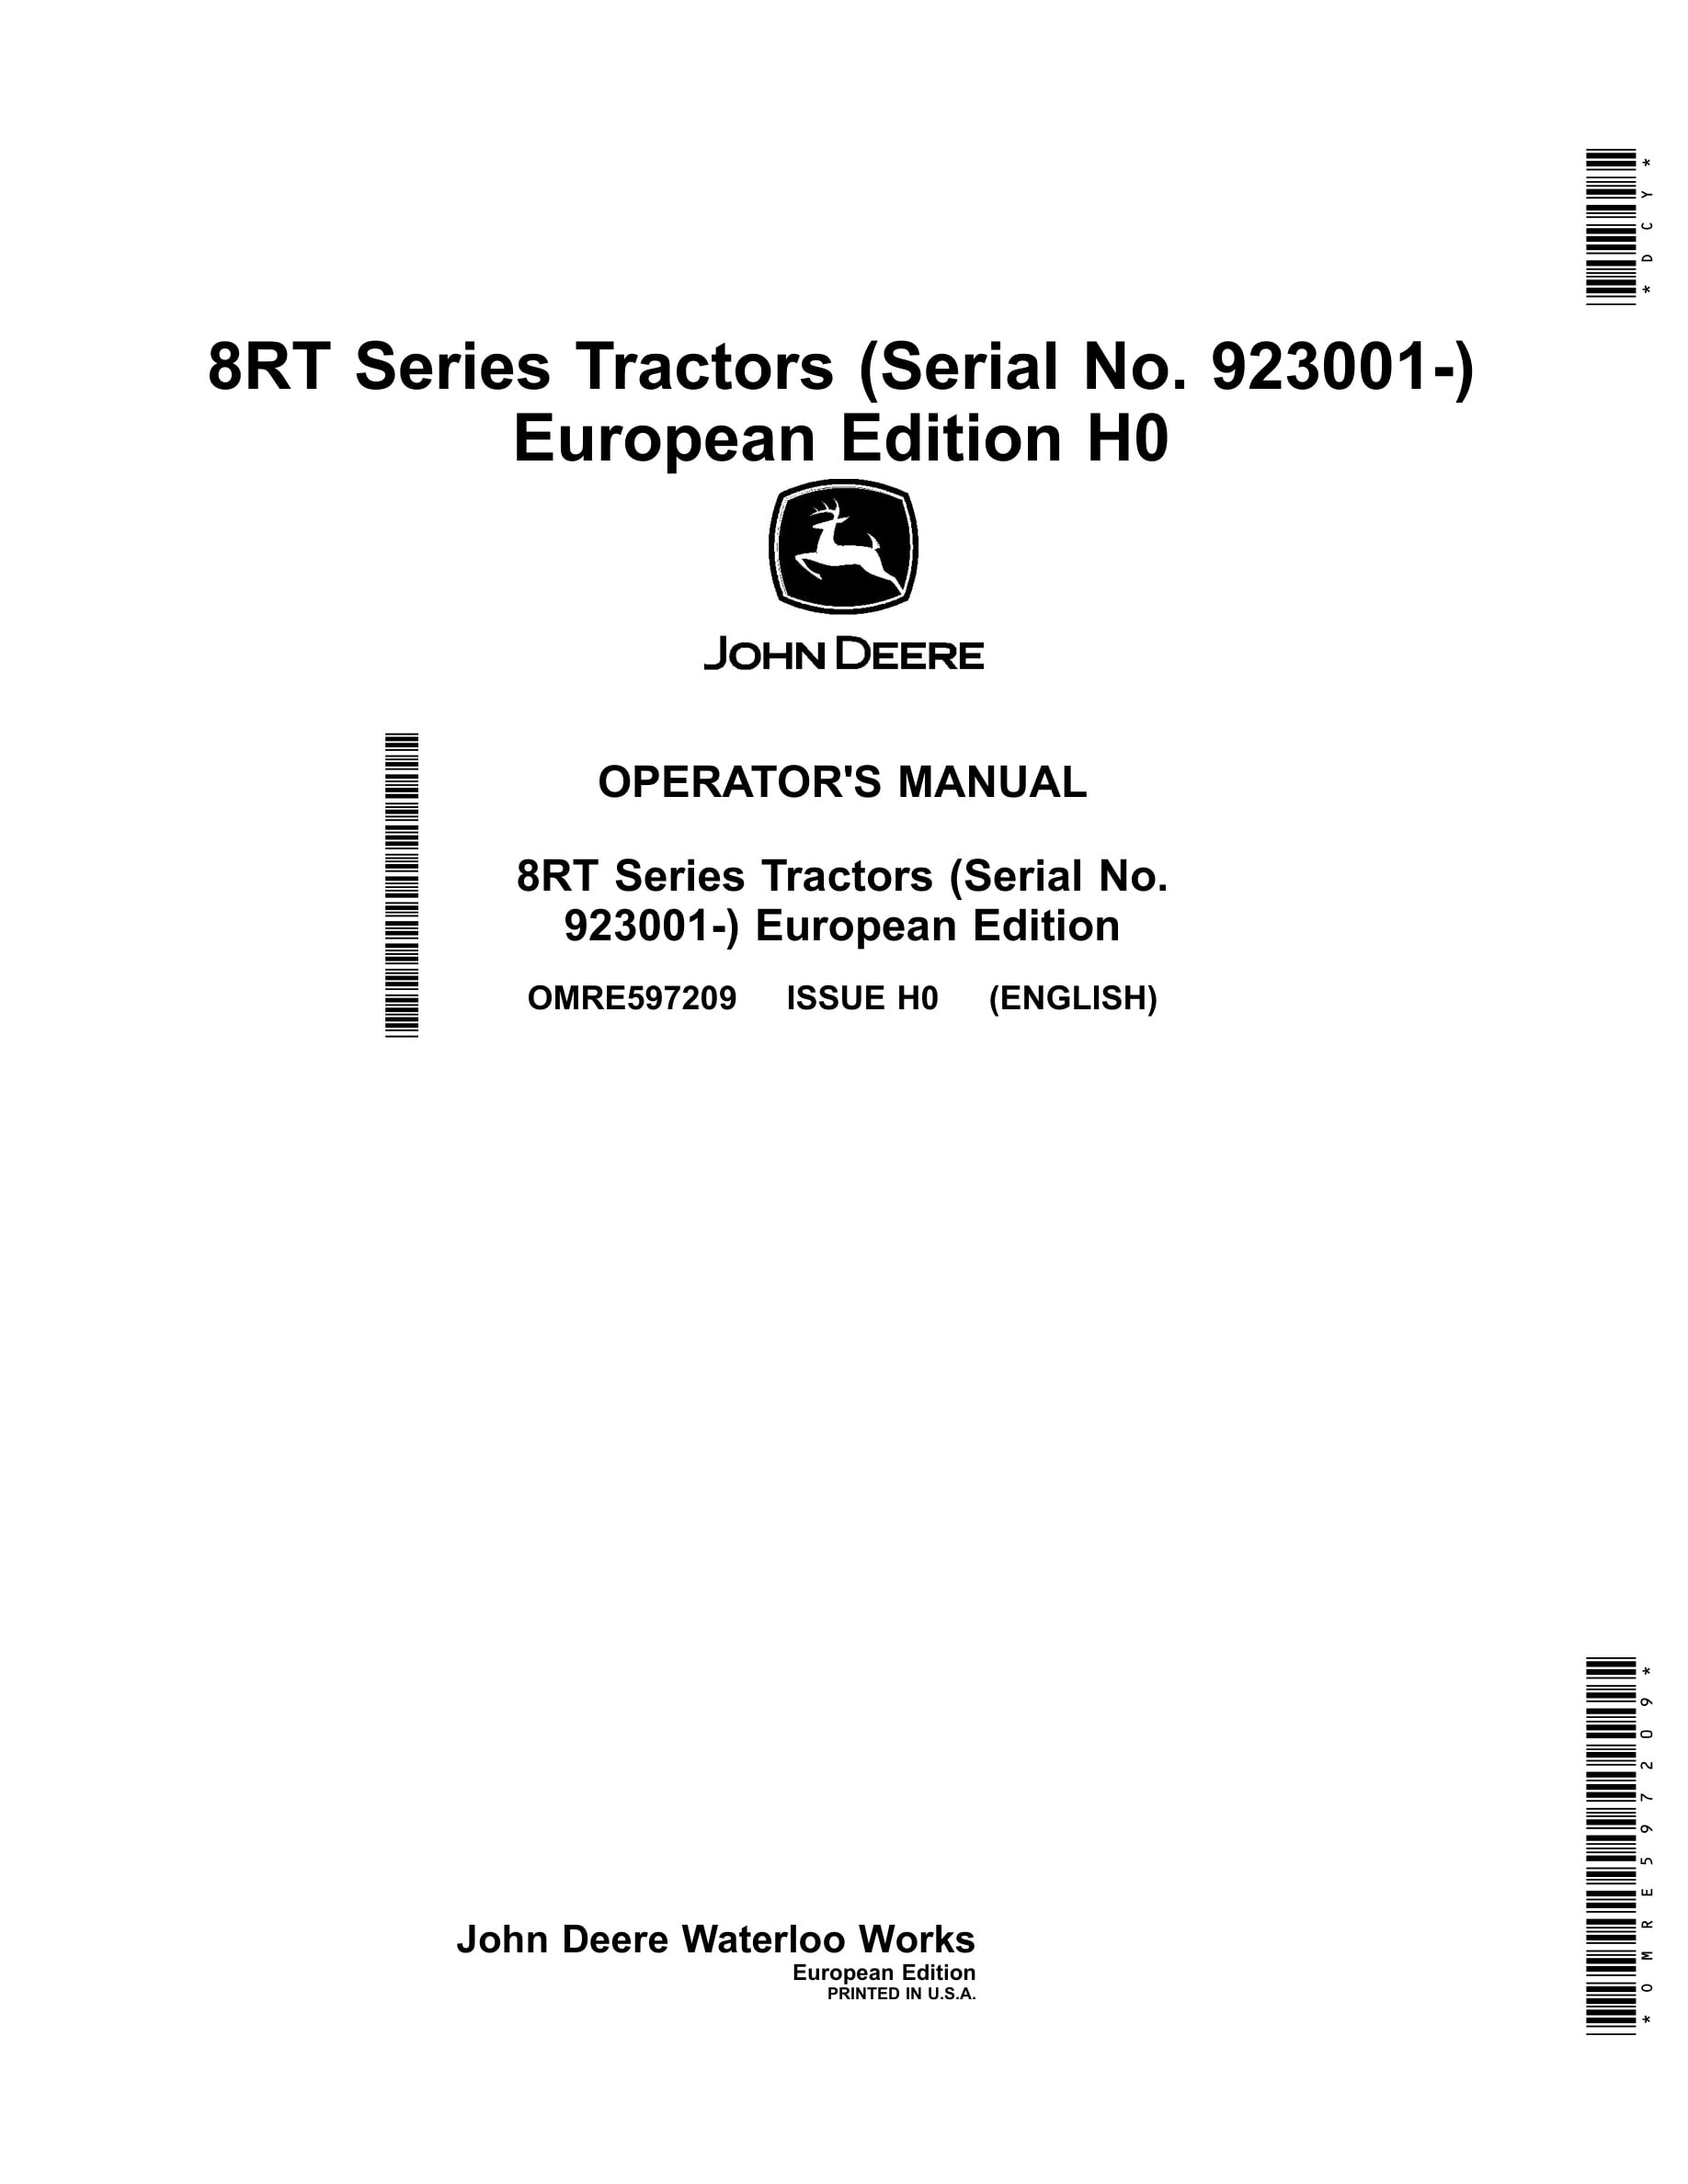 John Deere 8rt Series Tractors Operator Manuals OMRE597209-1